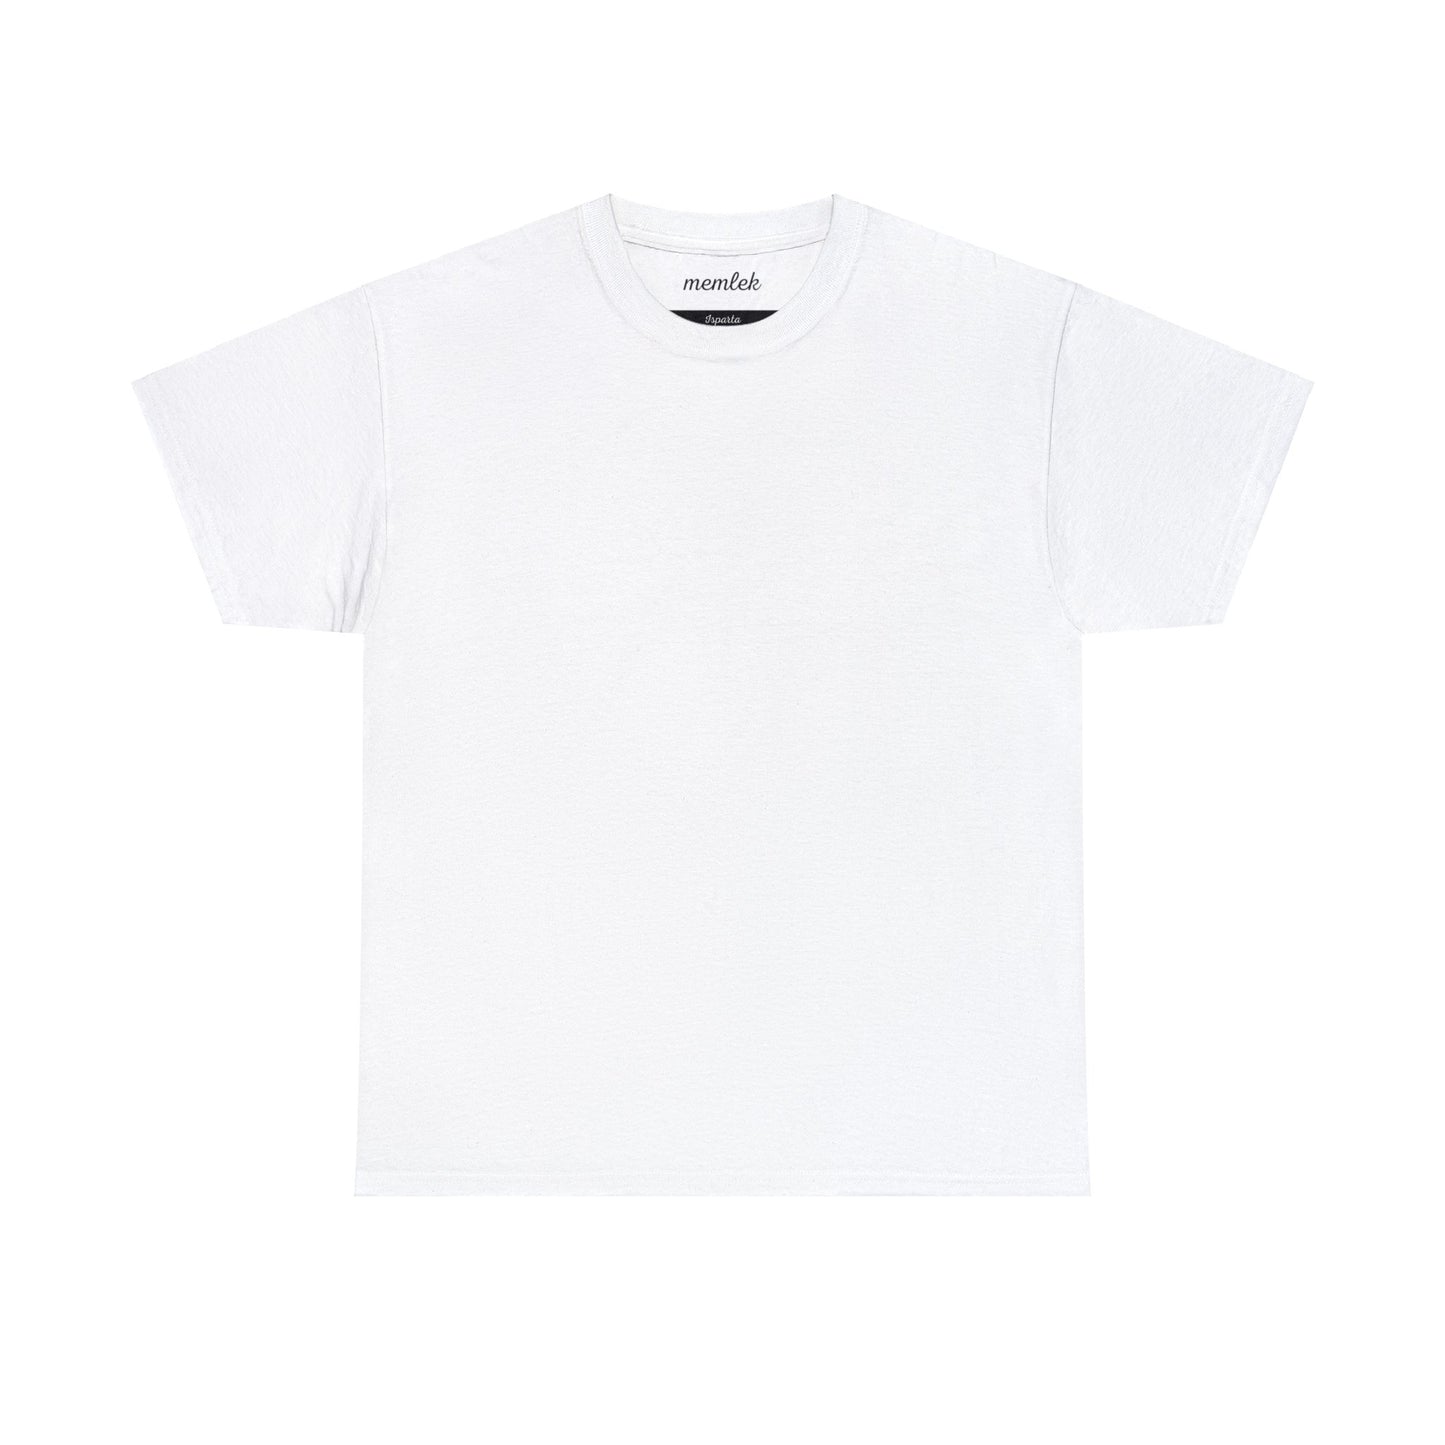 Kurt - 32 Isparta - T-Shirt - Back Print - Black/White